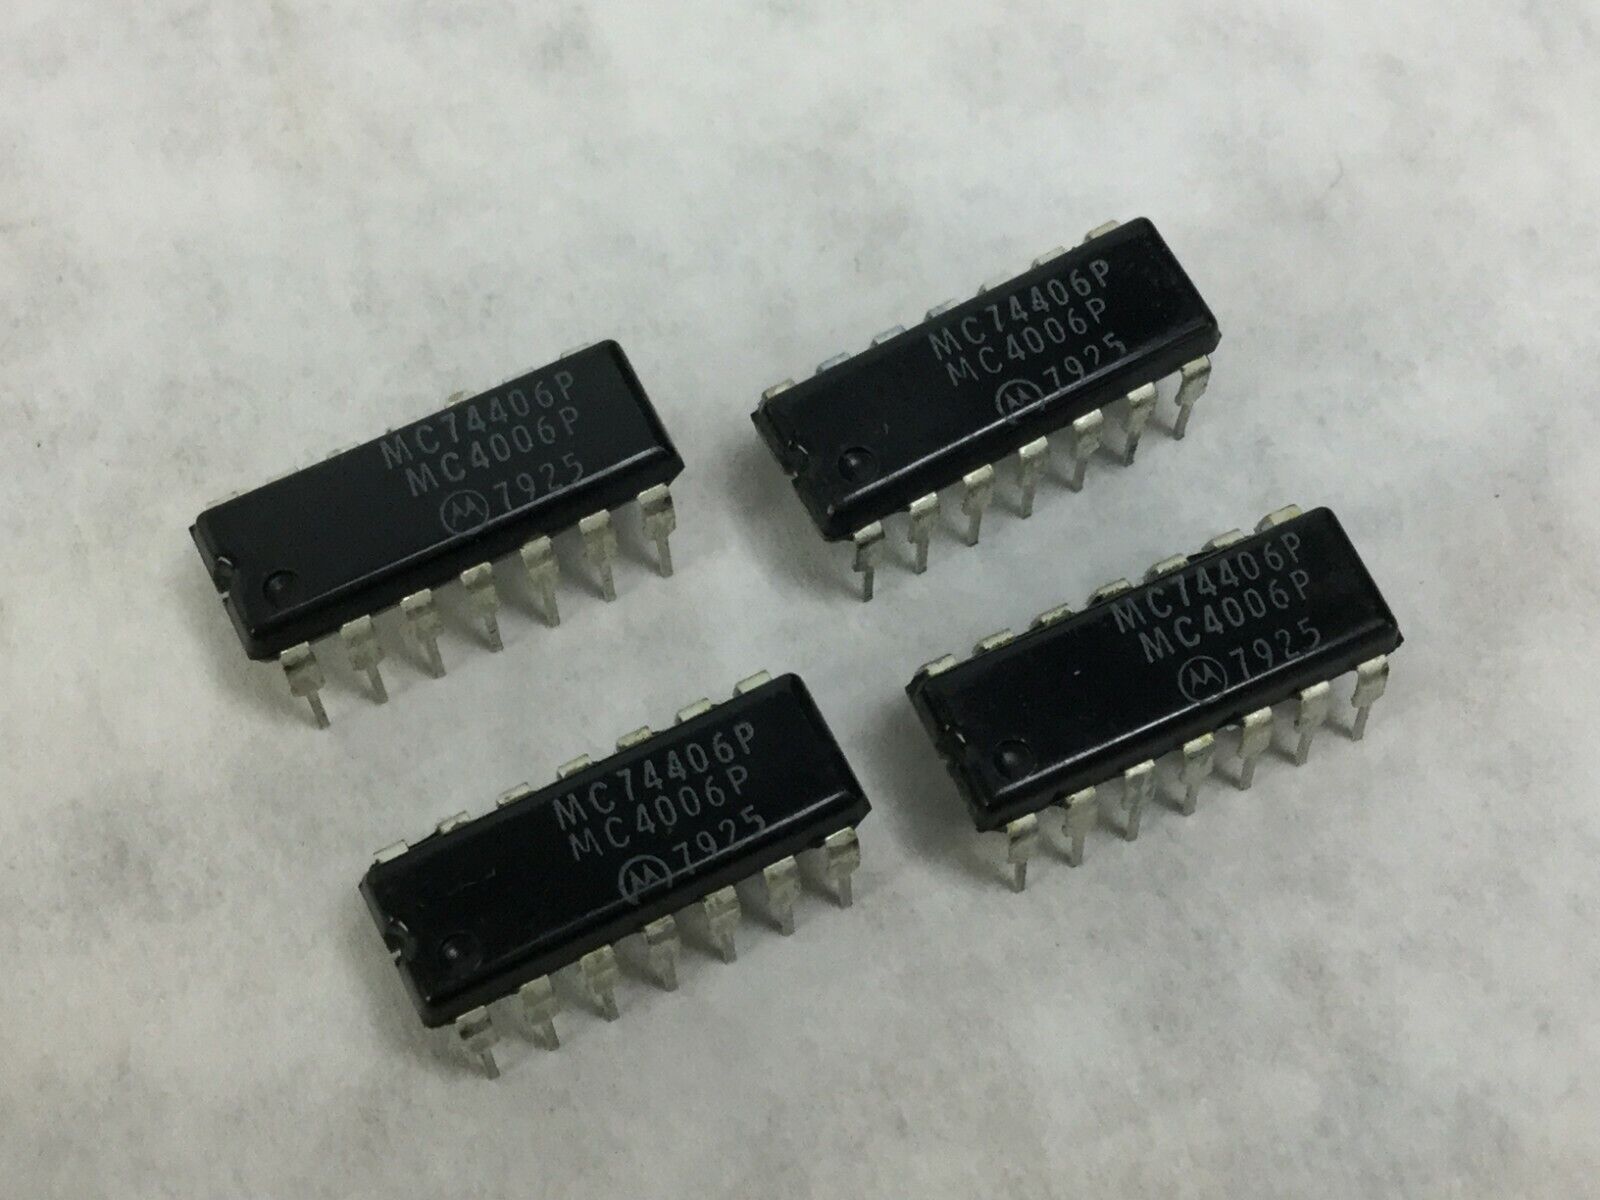 Genuine MOTOROLA MC74406P 3-To-8 Line Demultplexer/Decoder 14 Pin Dip  Lot of 4